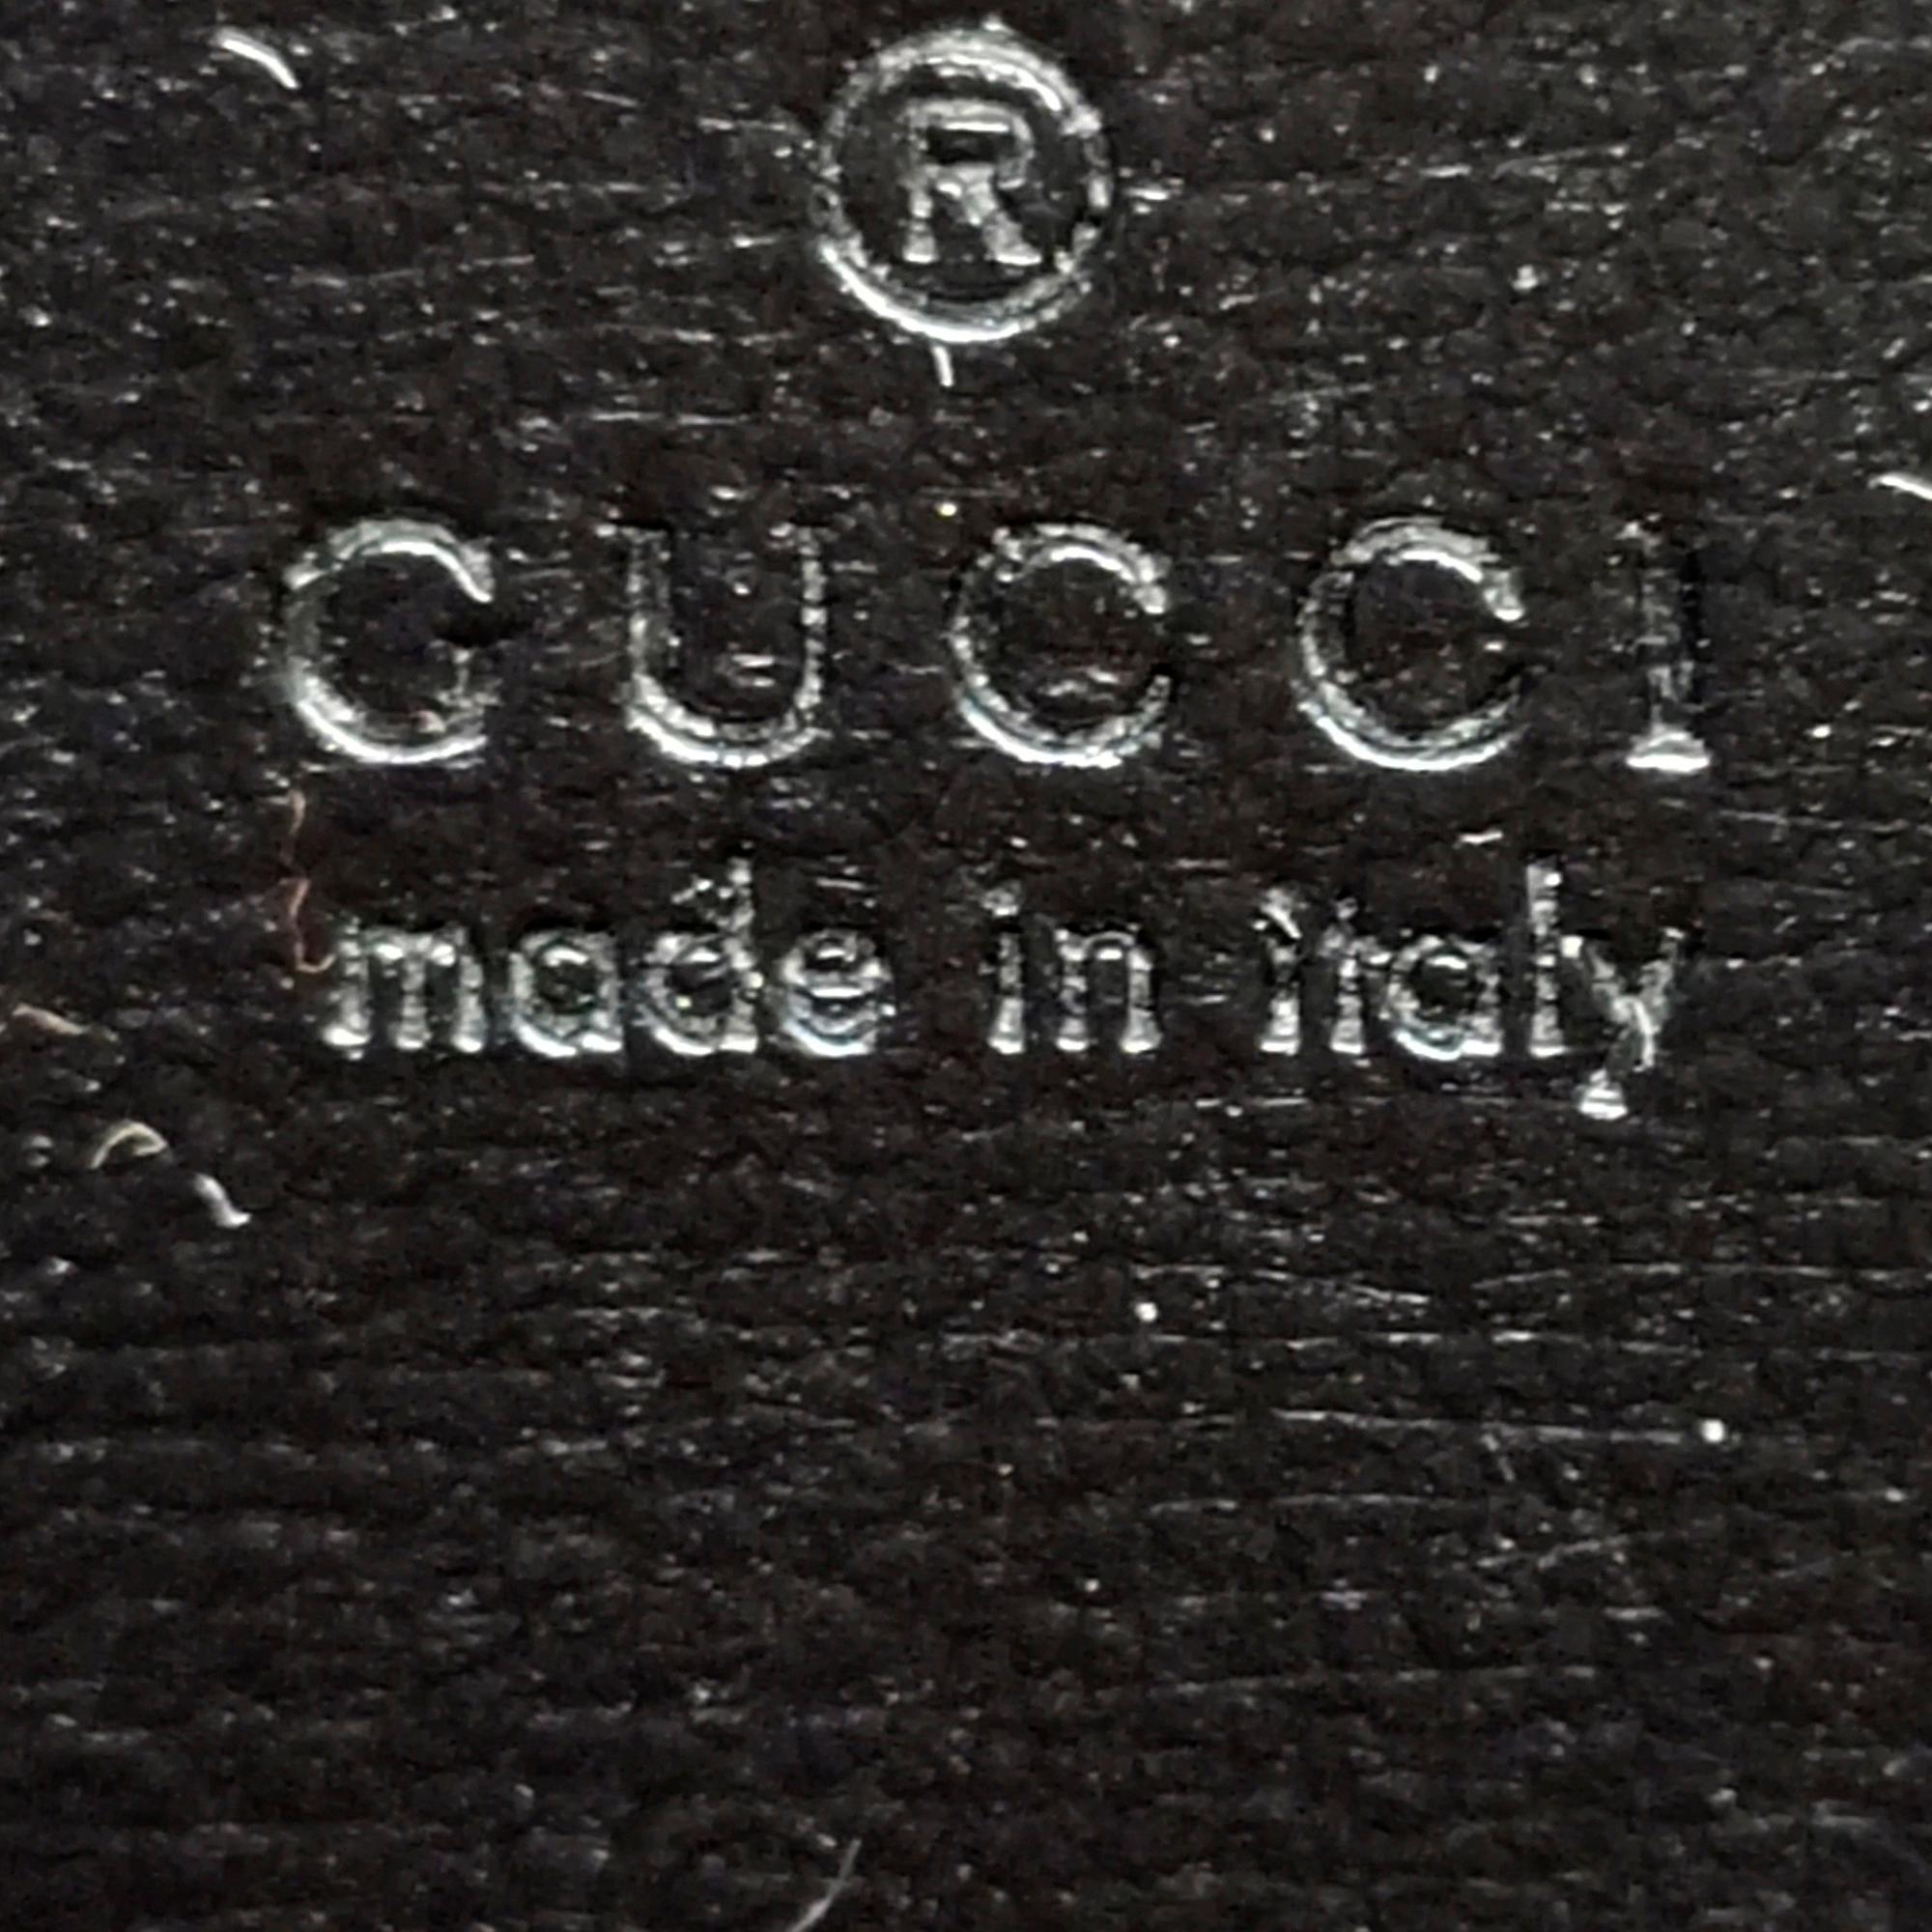 Gucci Small Horsebit 1955 Crossbody Bag